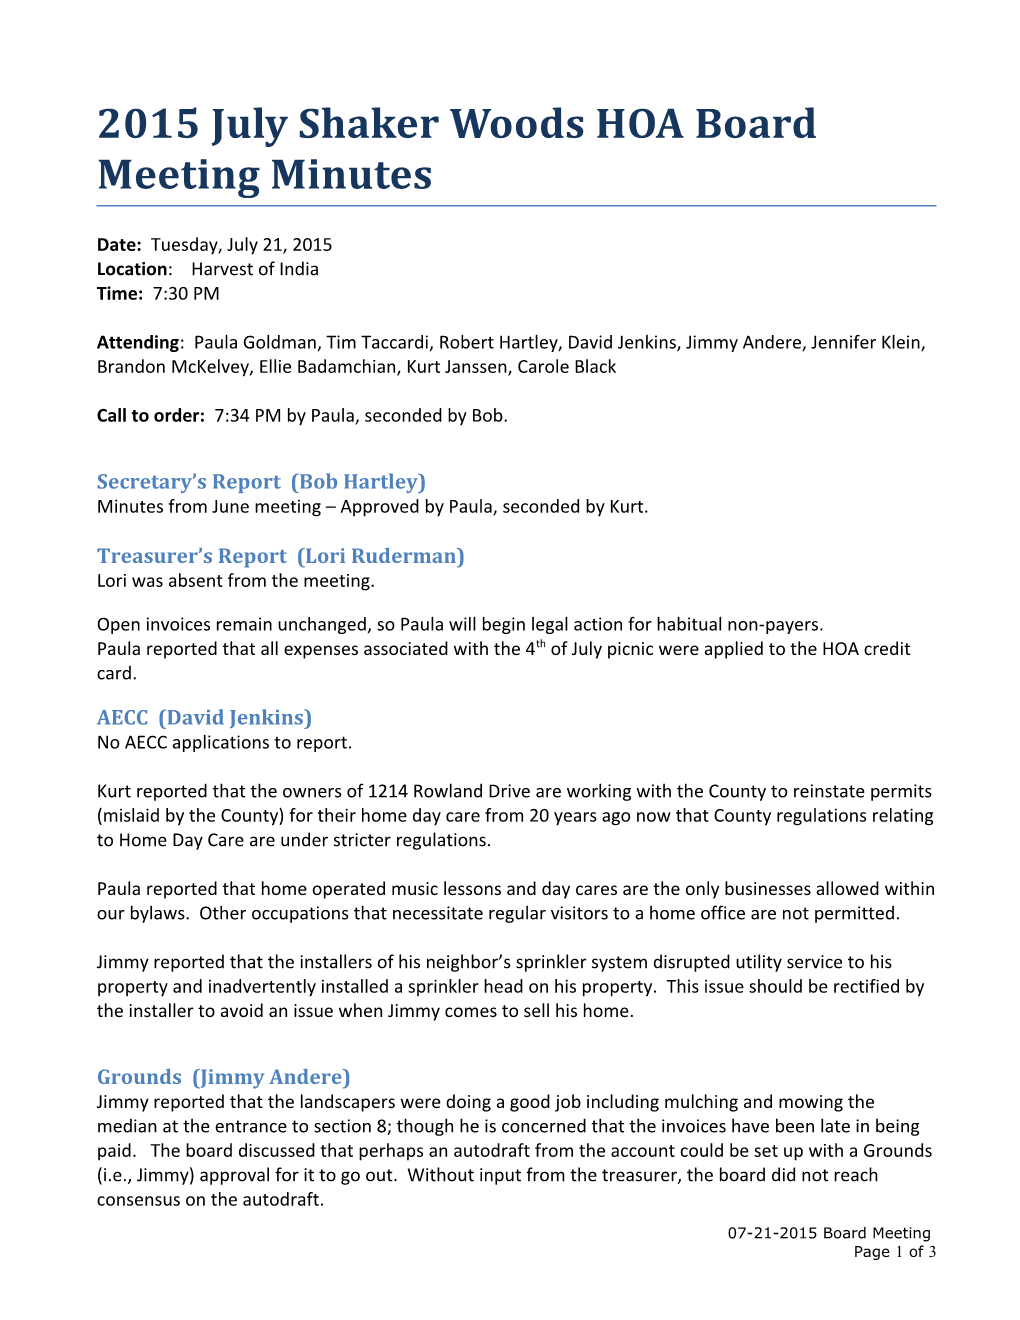 2015 July Shaker Woods HOA Board Meeting Minutes